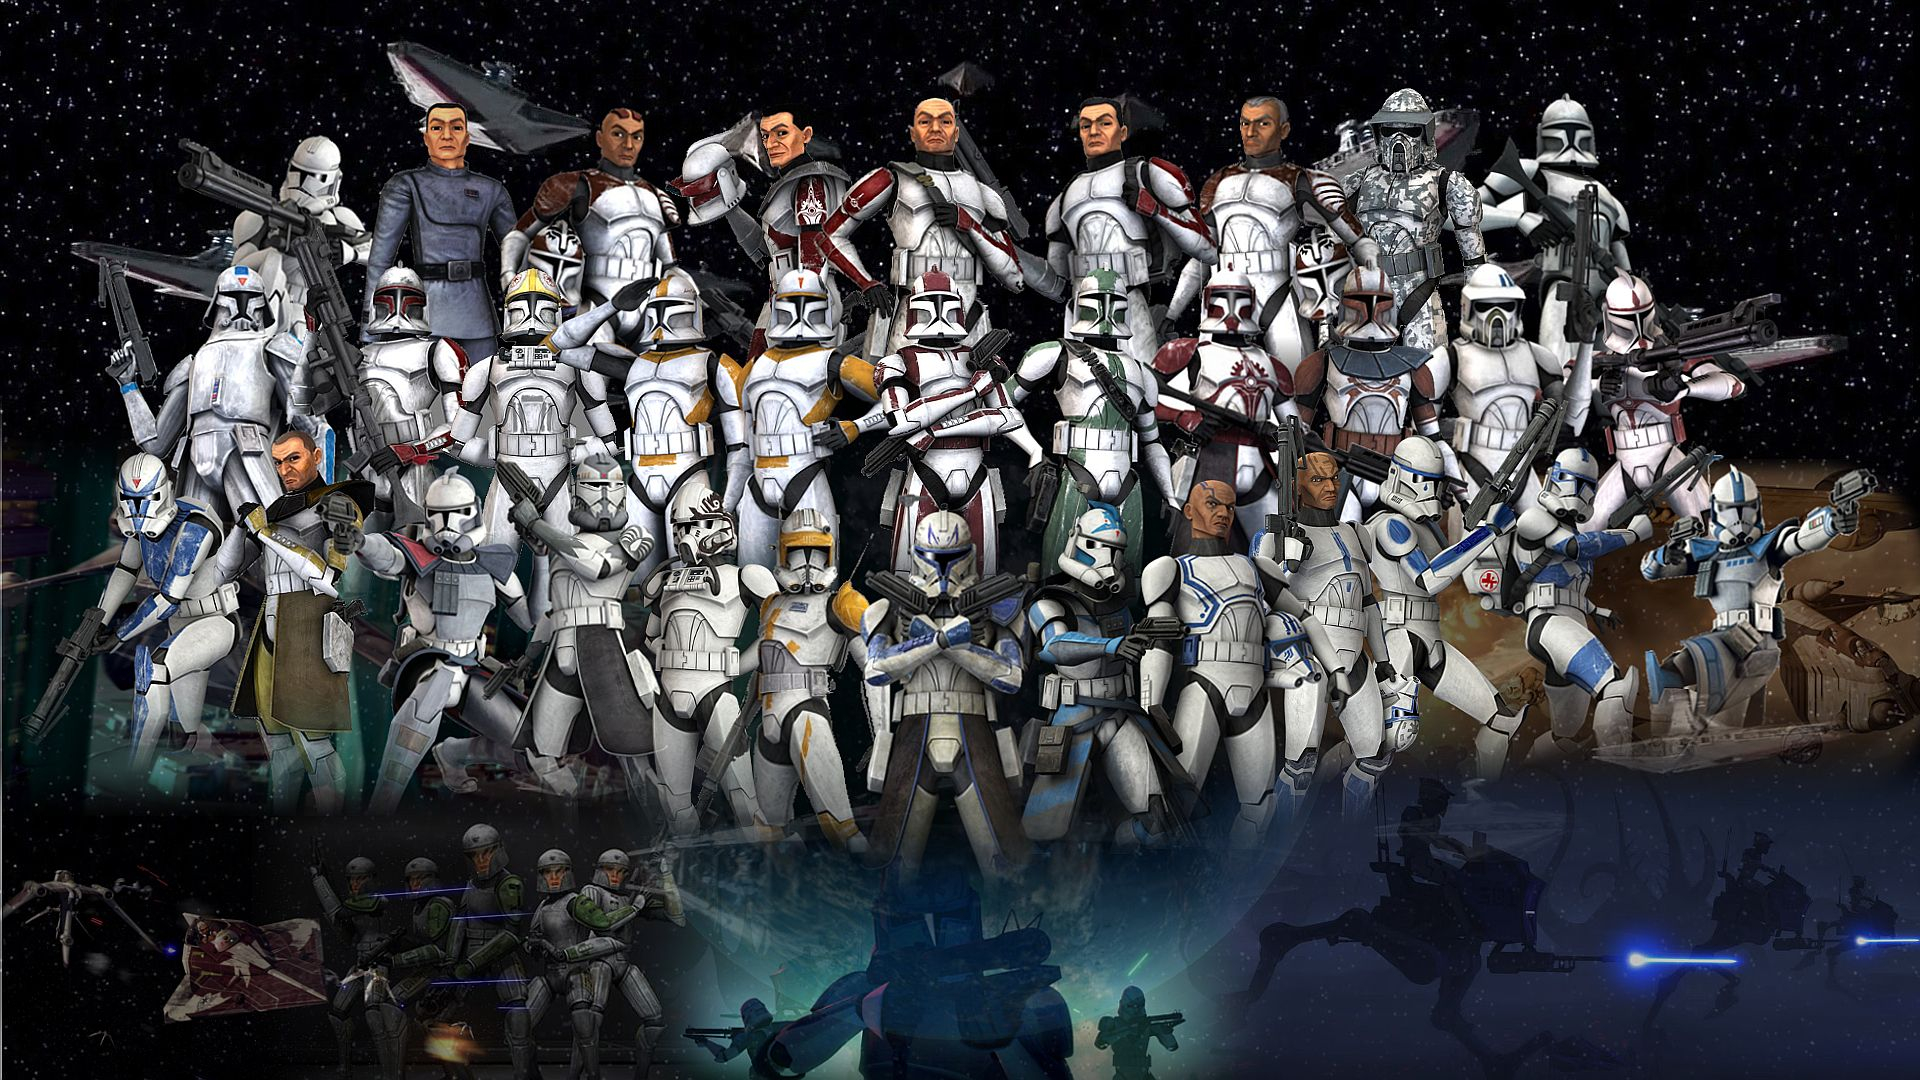 1920x1080 Clone Troopers Wallpaper | Star wars wallpaper, Star wars, Star wars clone wars